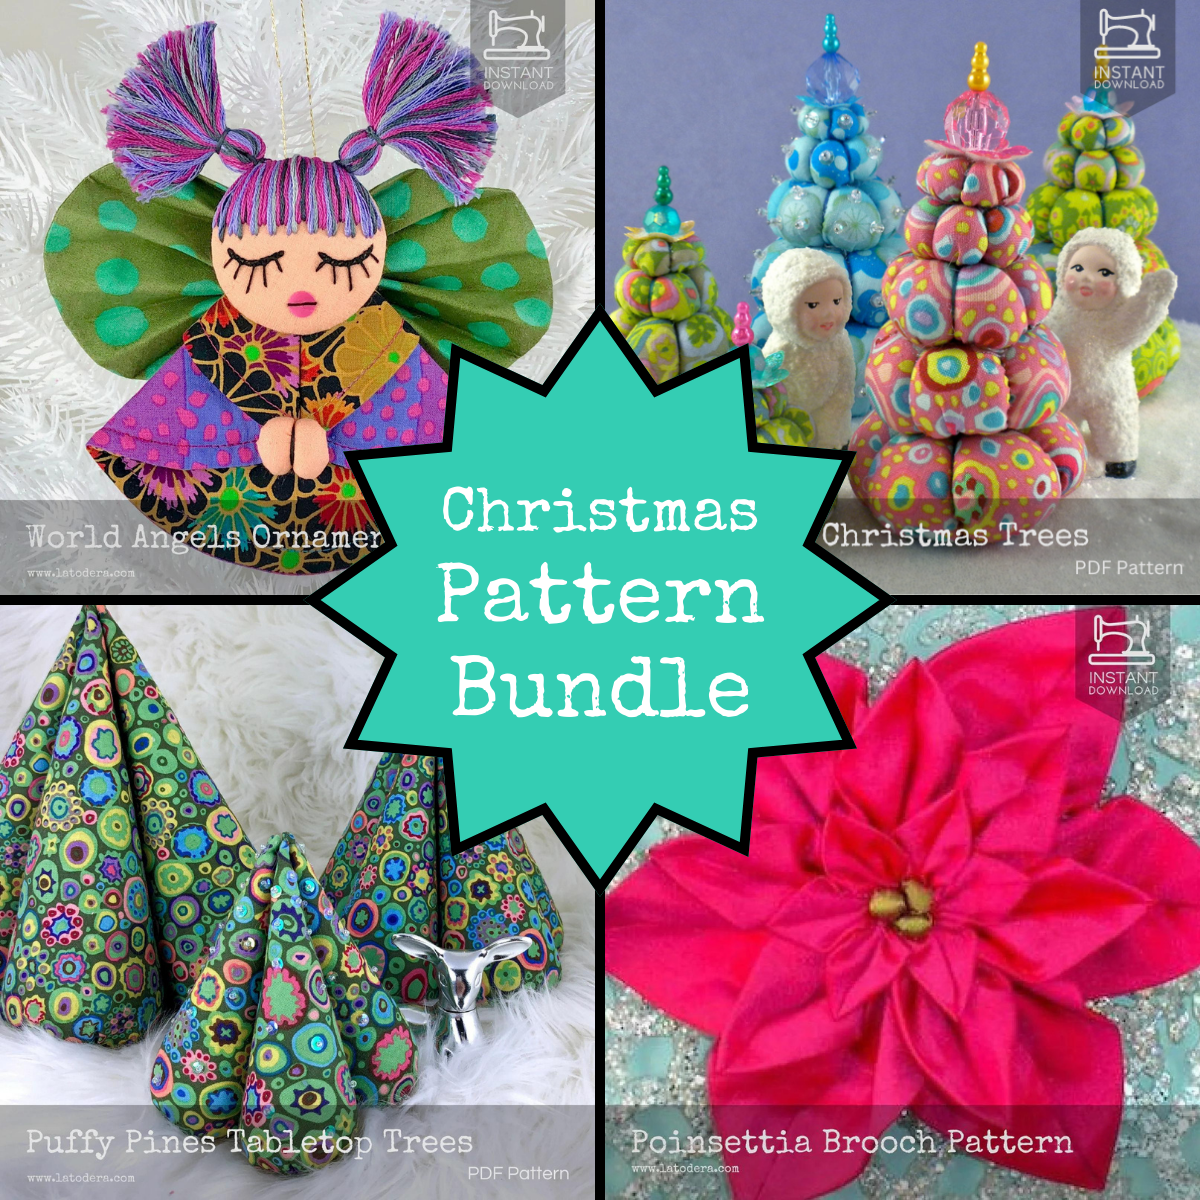 DIY Fabric Flower Poppy Brooch Tutorial - PDF Sewing Pattern – La Todera